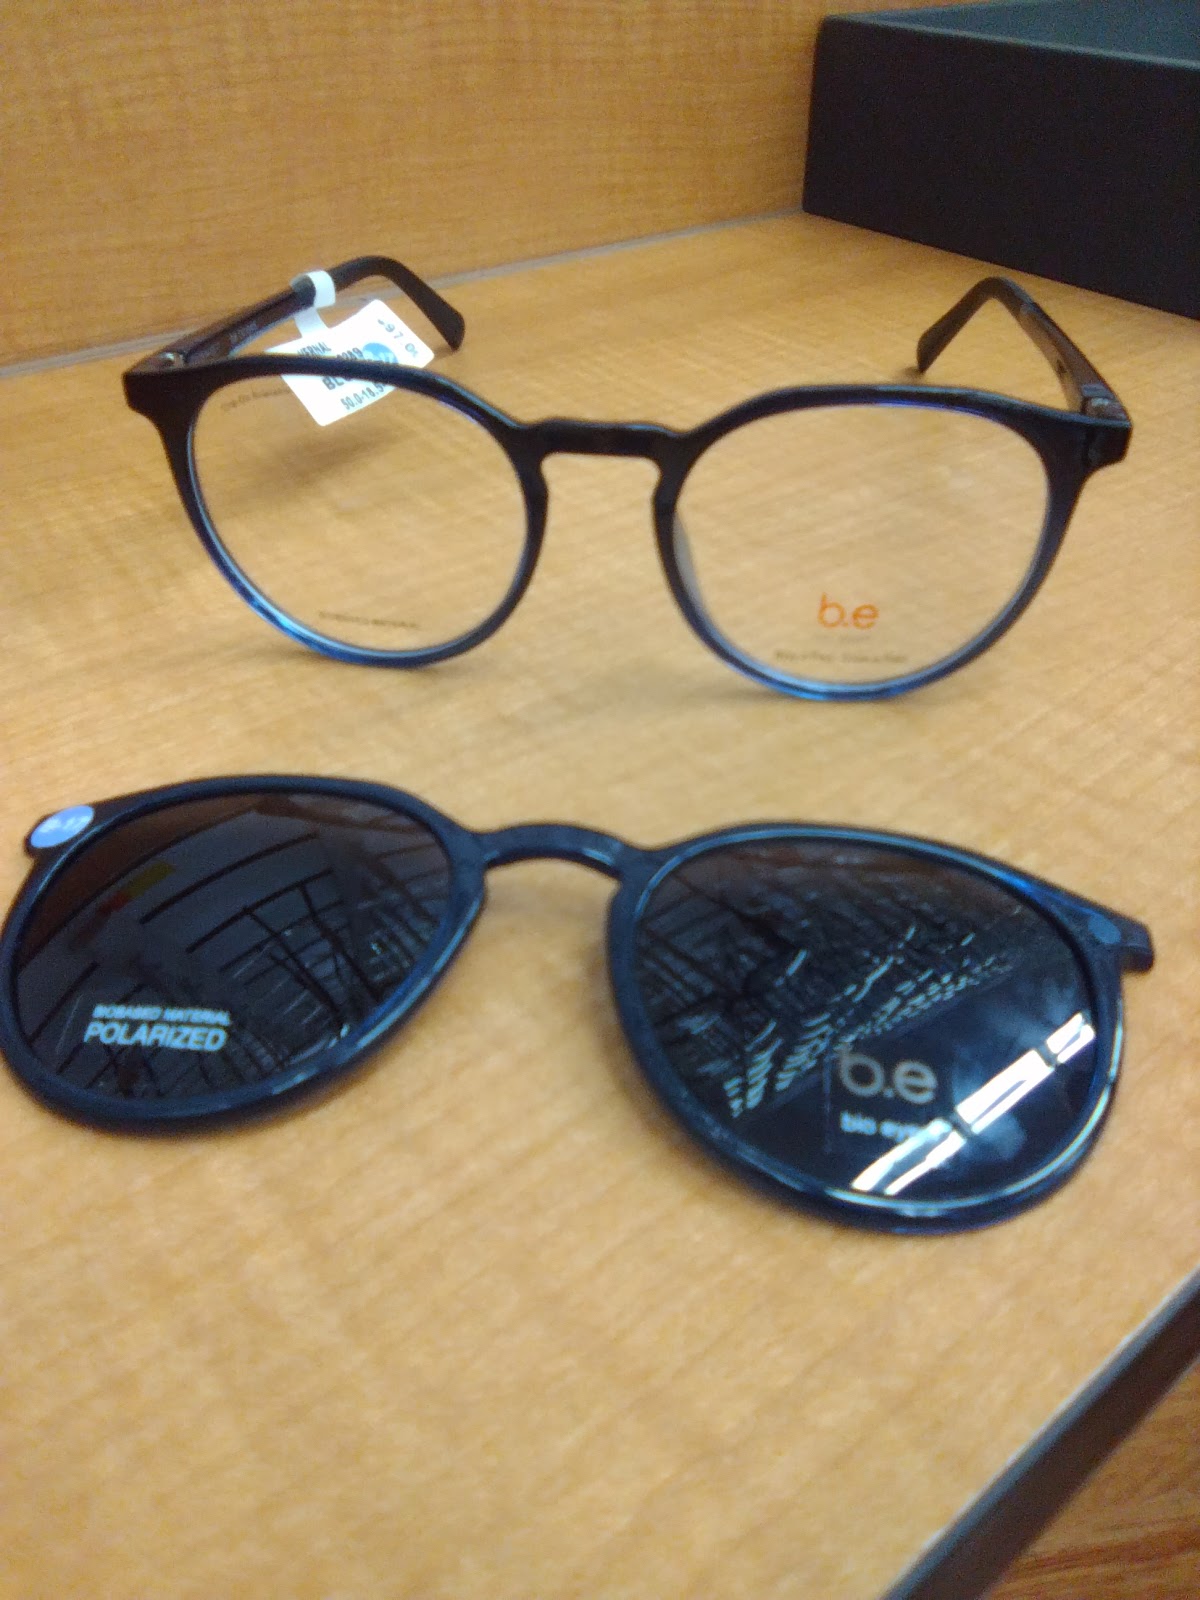 Walmart Vision & Glasses 567 PA-100, Bechtelsville Pennsylvania 19505